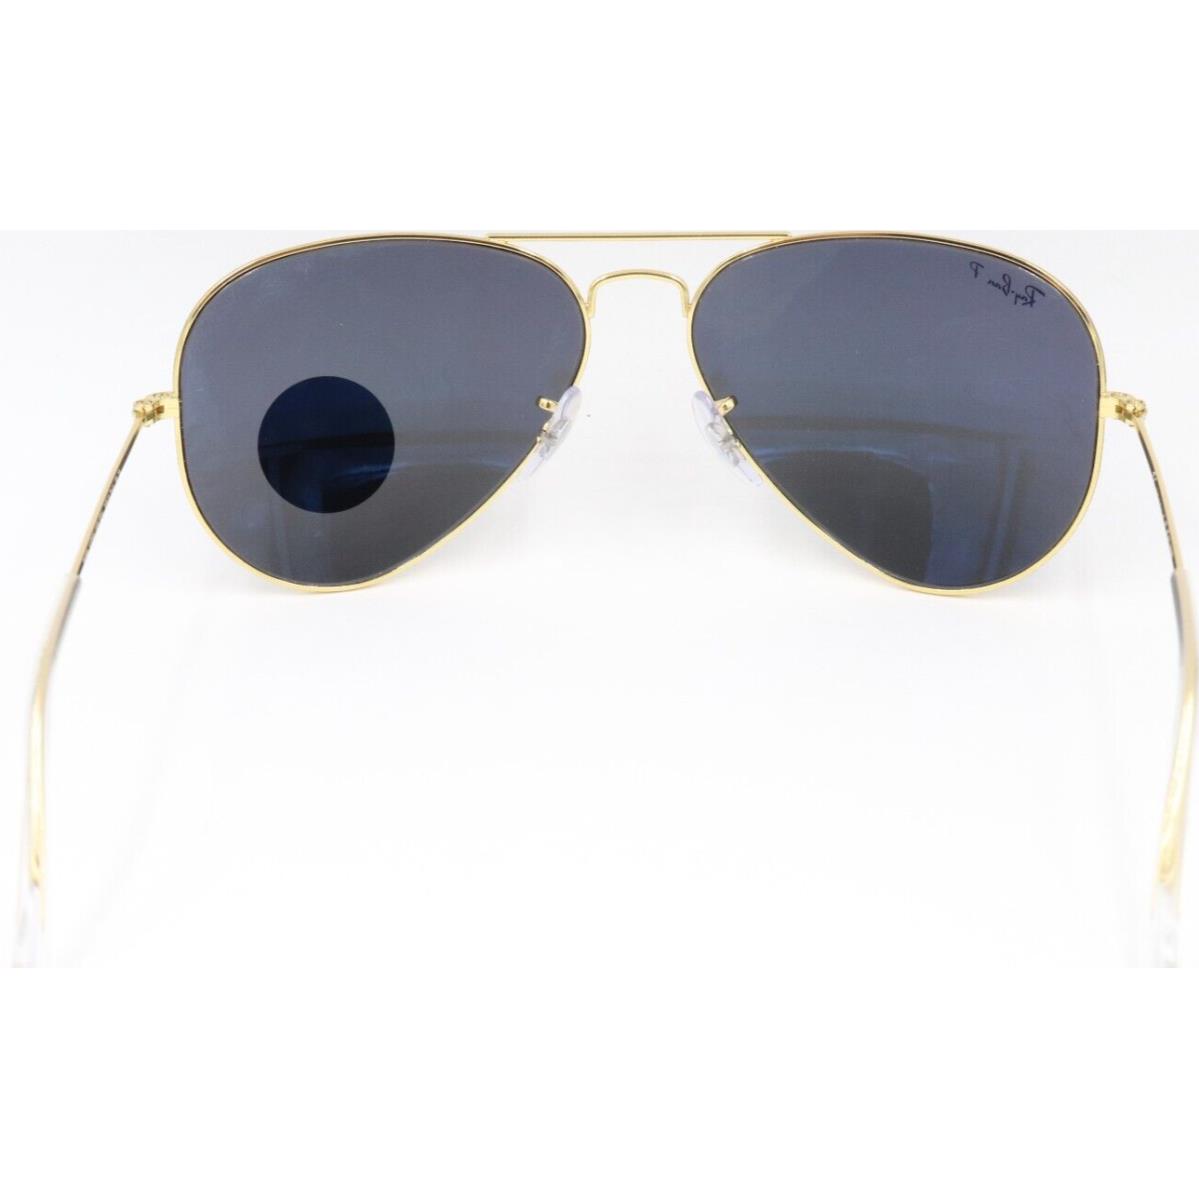 Ray-Ban sunglasses Aviator Metal - Legend gold Frame, Black Lens